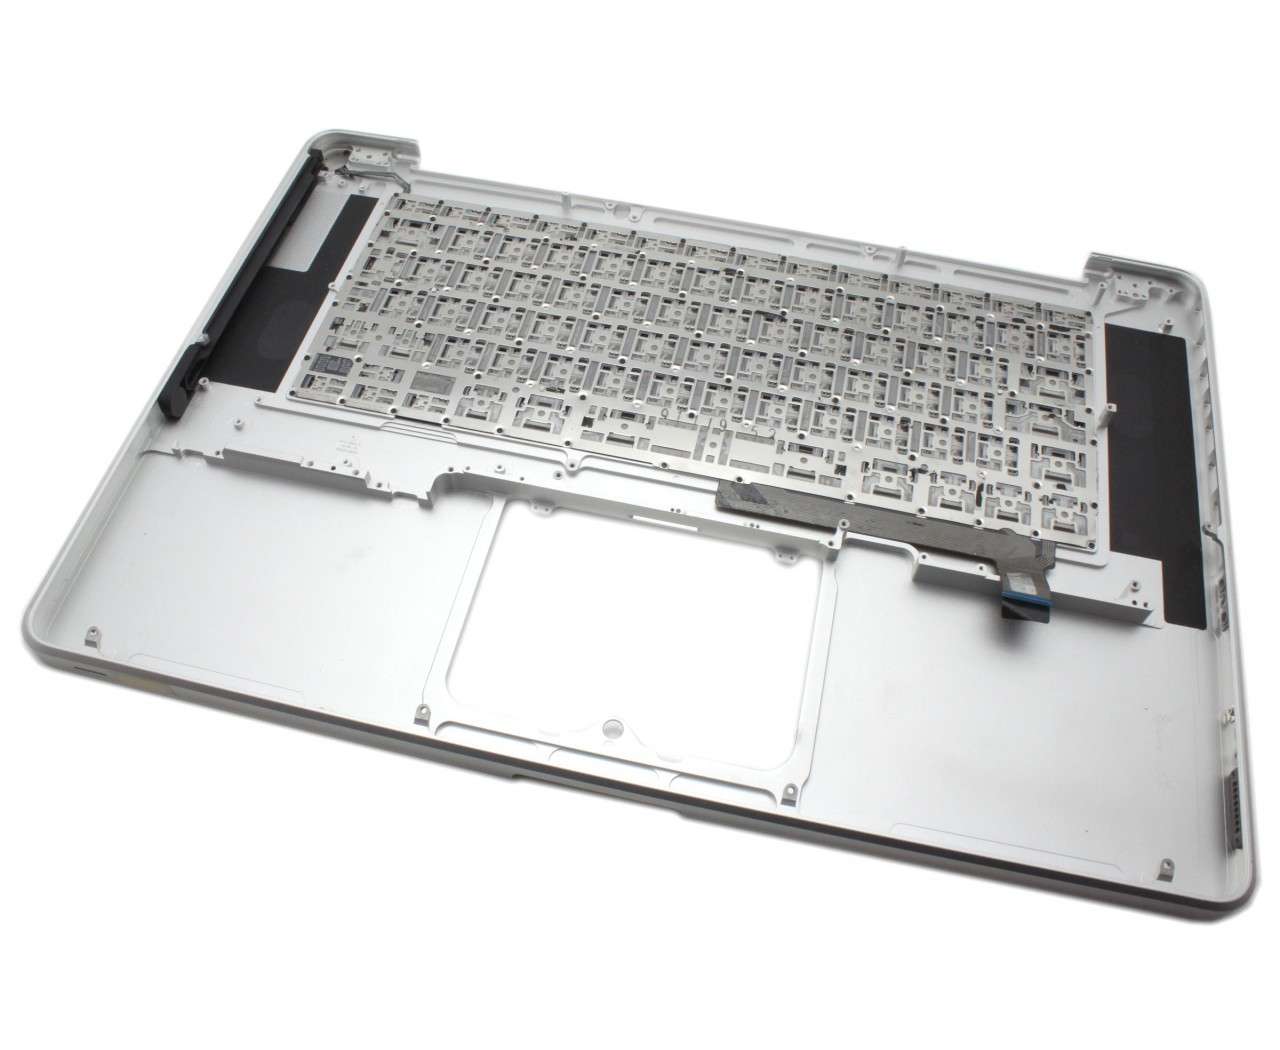 Tastatura Apple MacBook Pro 15 MC721LL A Neagra cu Palmrest Argintiu Refurbished Apple Apple